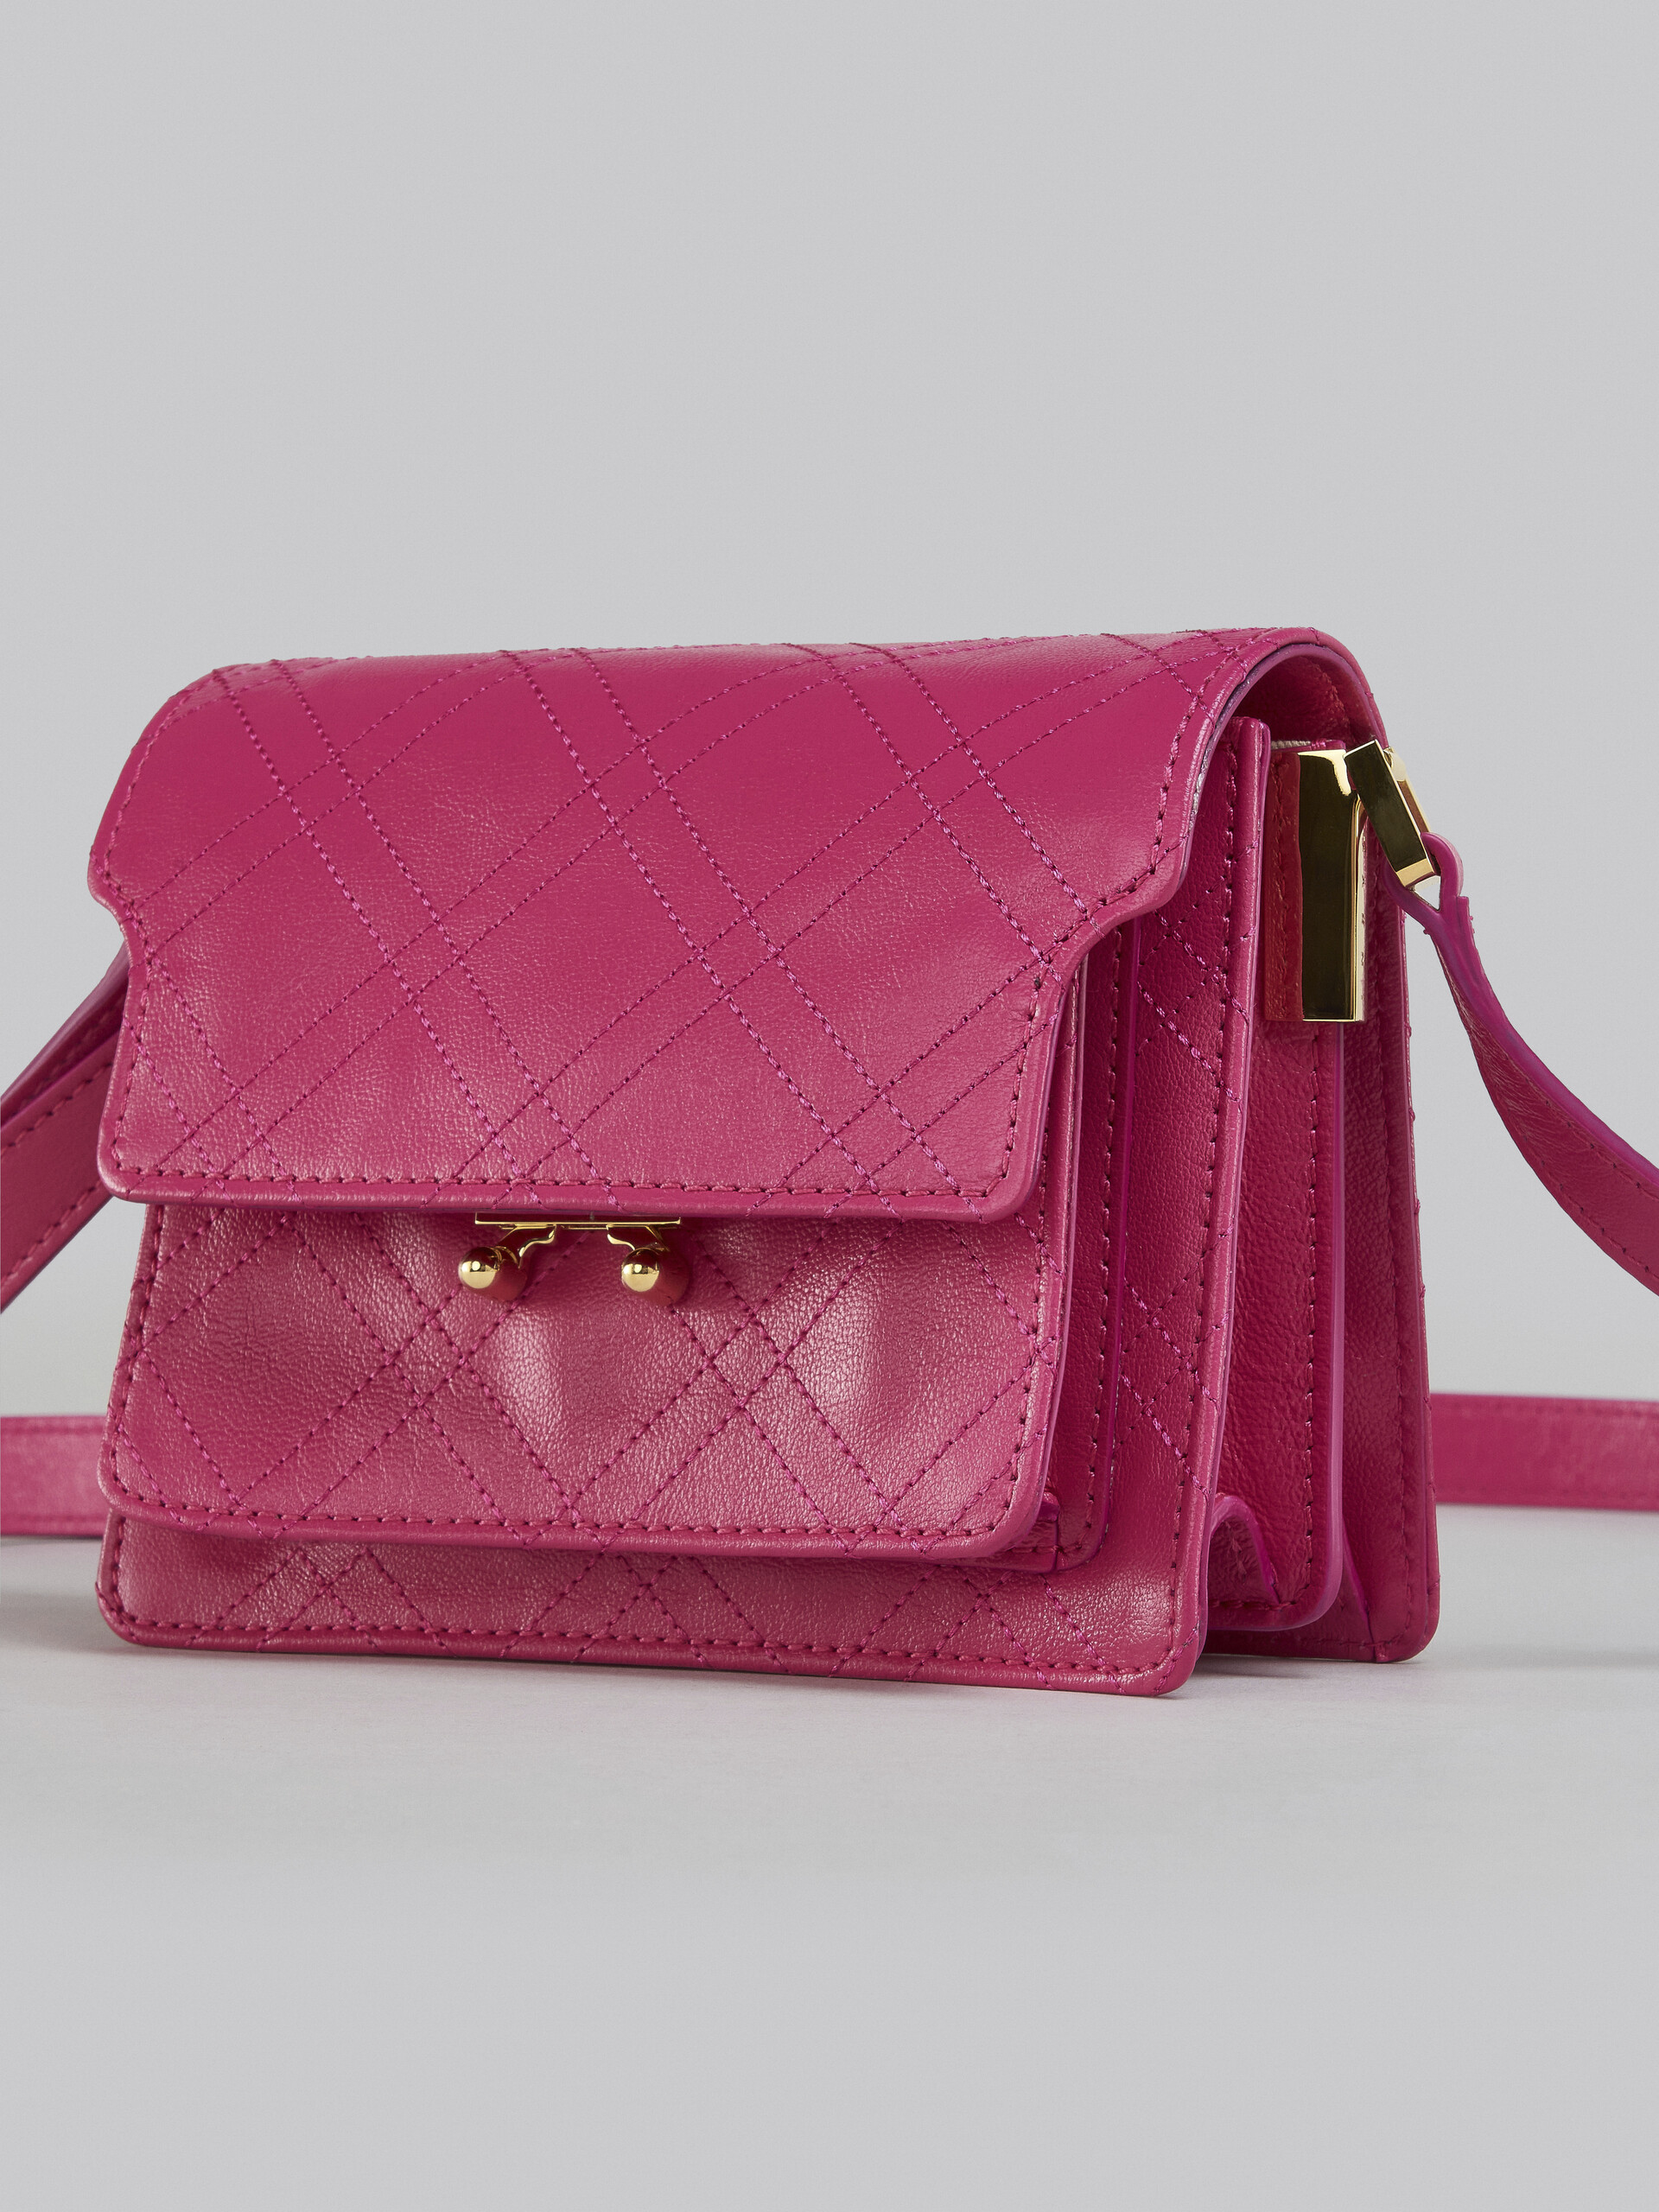 Trunk Soft Mini Bag in fuchsia leather - Shoulder Bag - Image 5